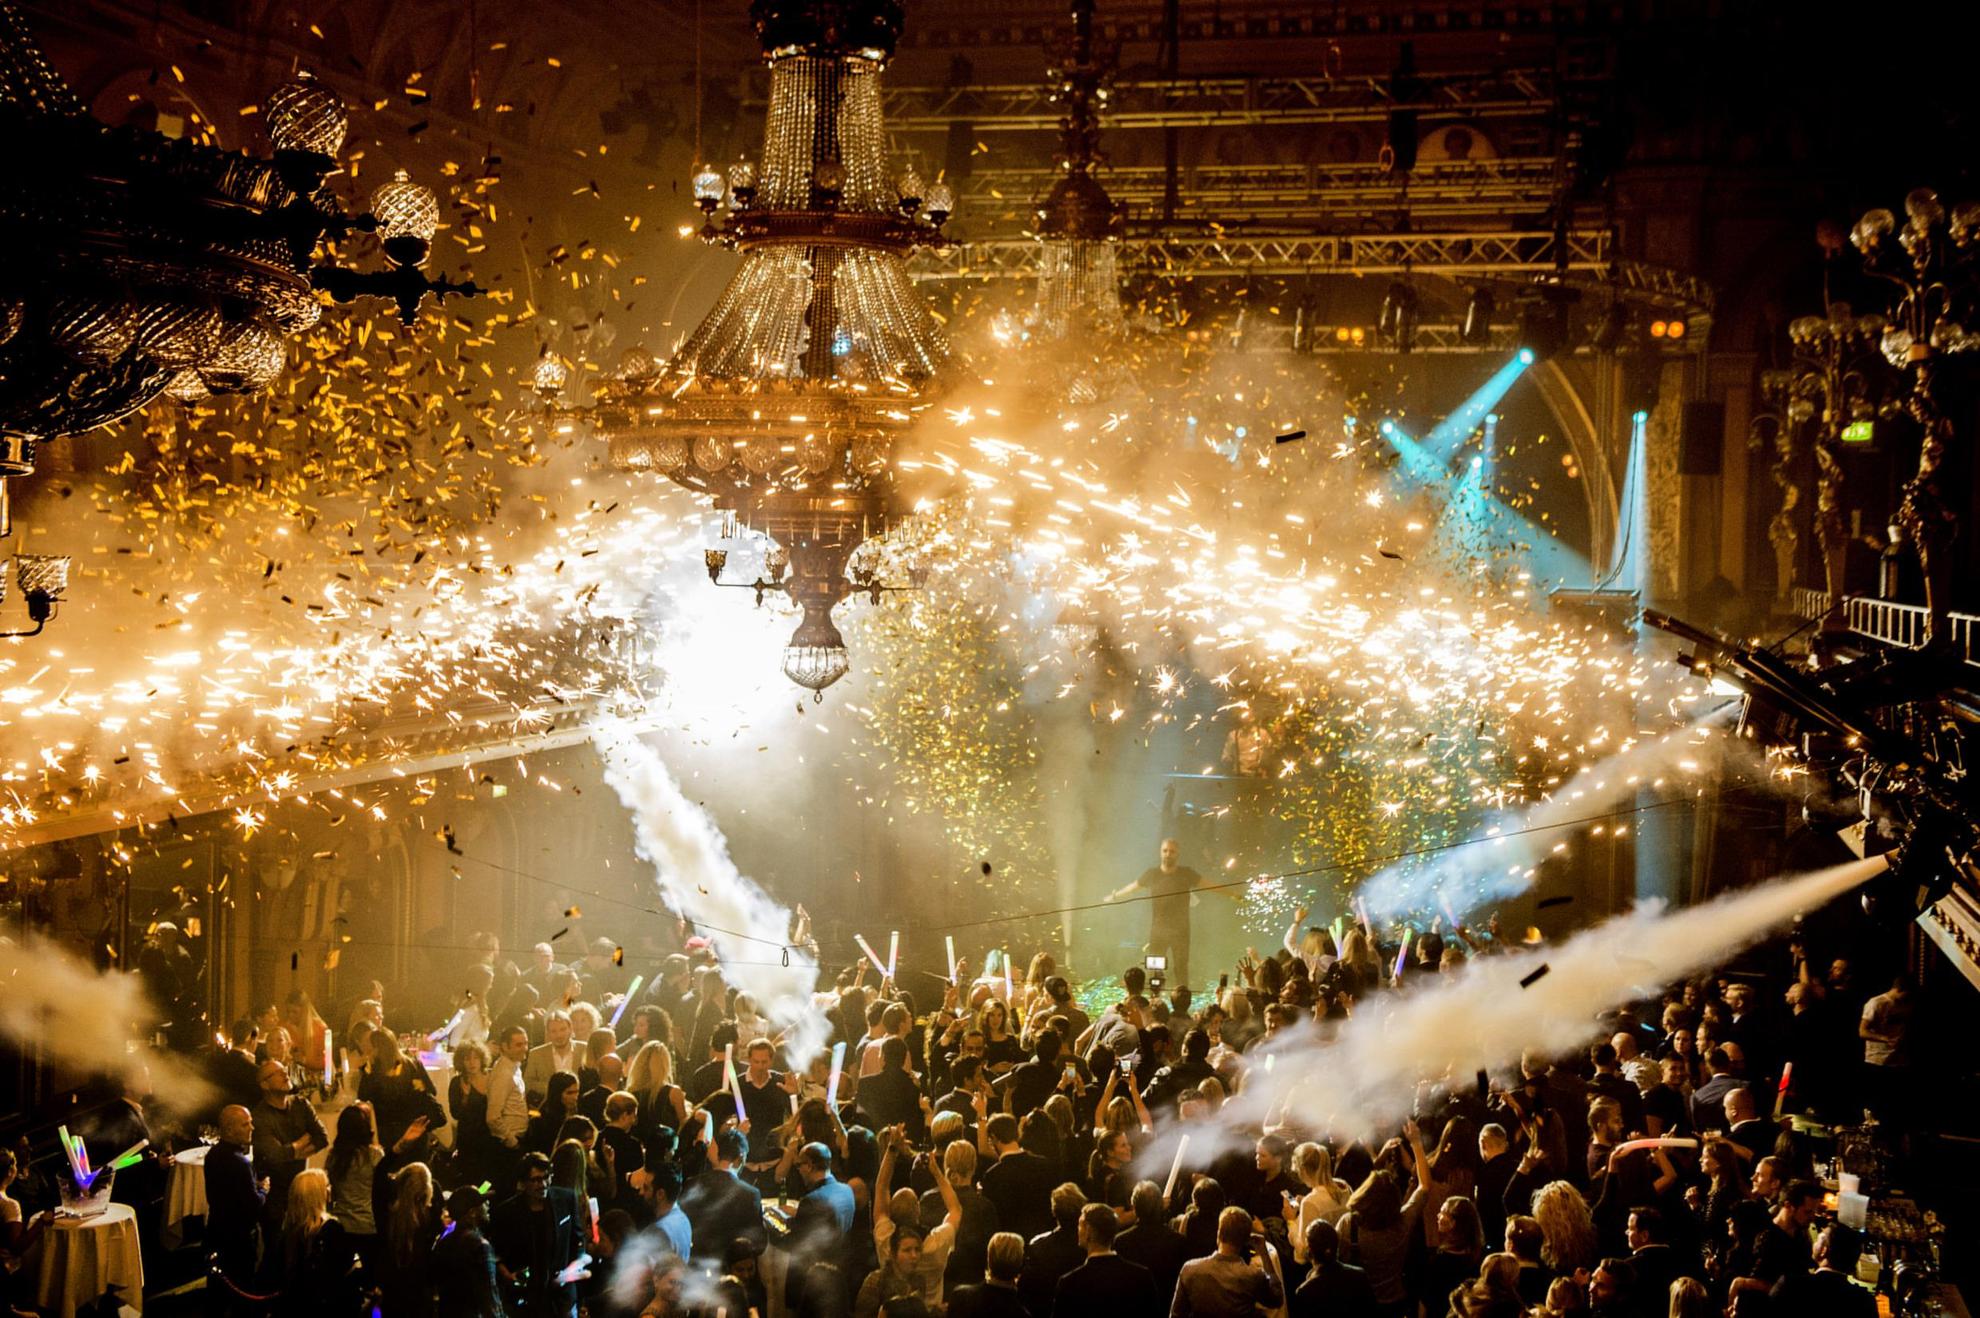 Berns nachtclub gevuld met dansende mensen. Rook van rookkanonnen en confetti in de lucht.